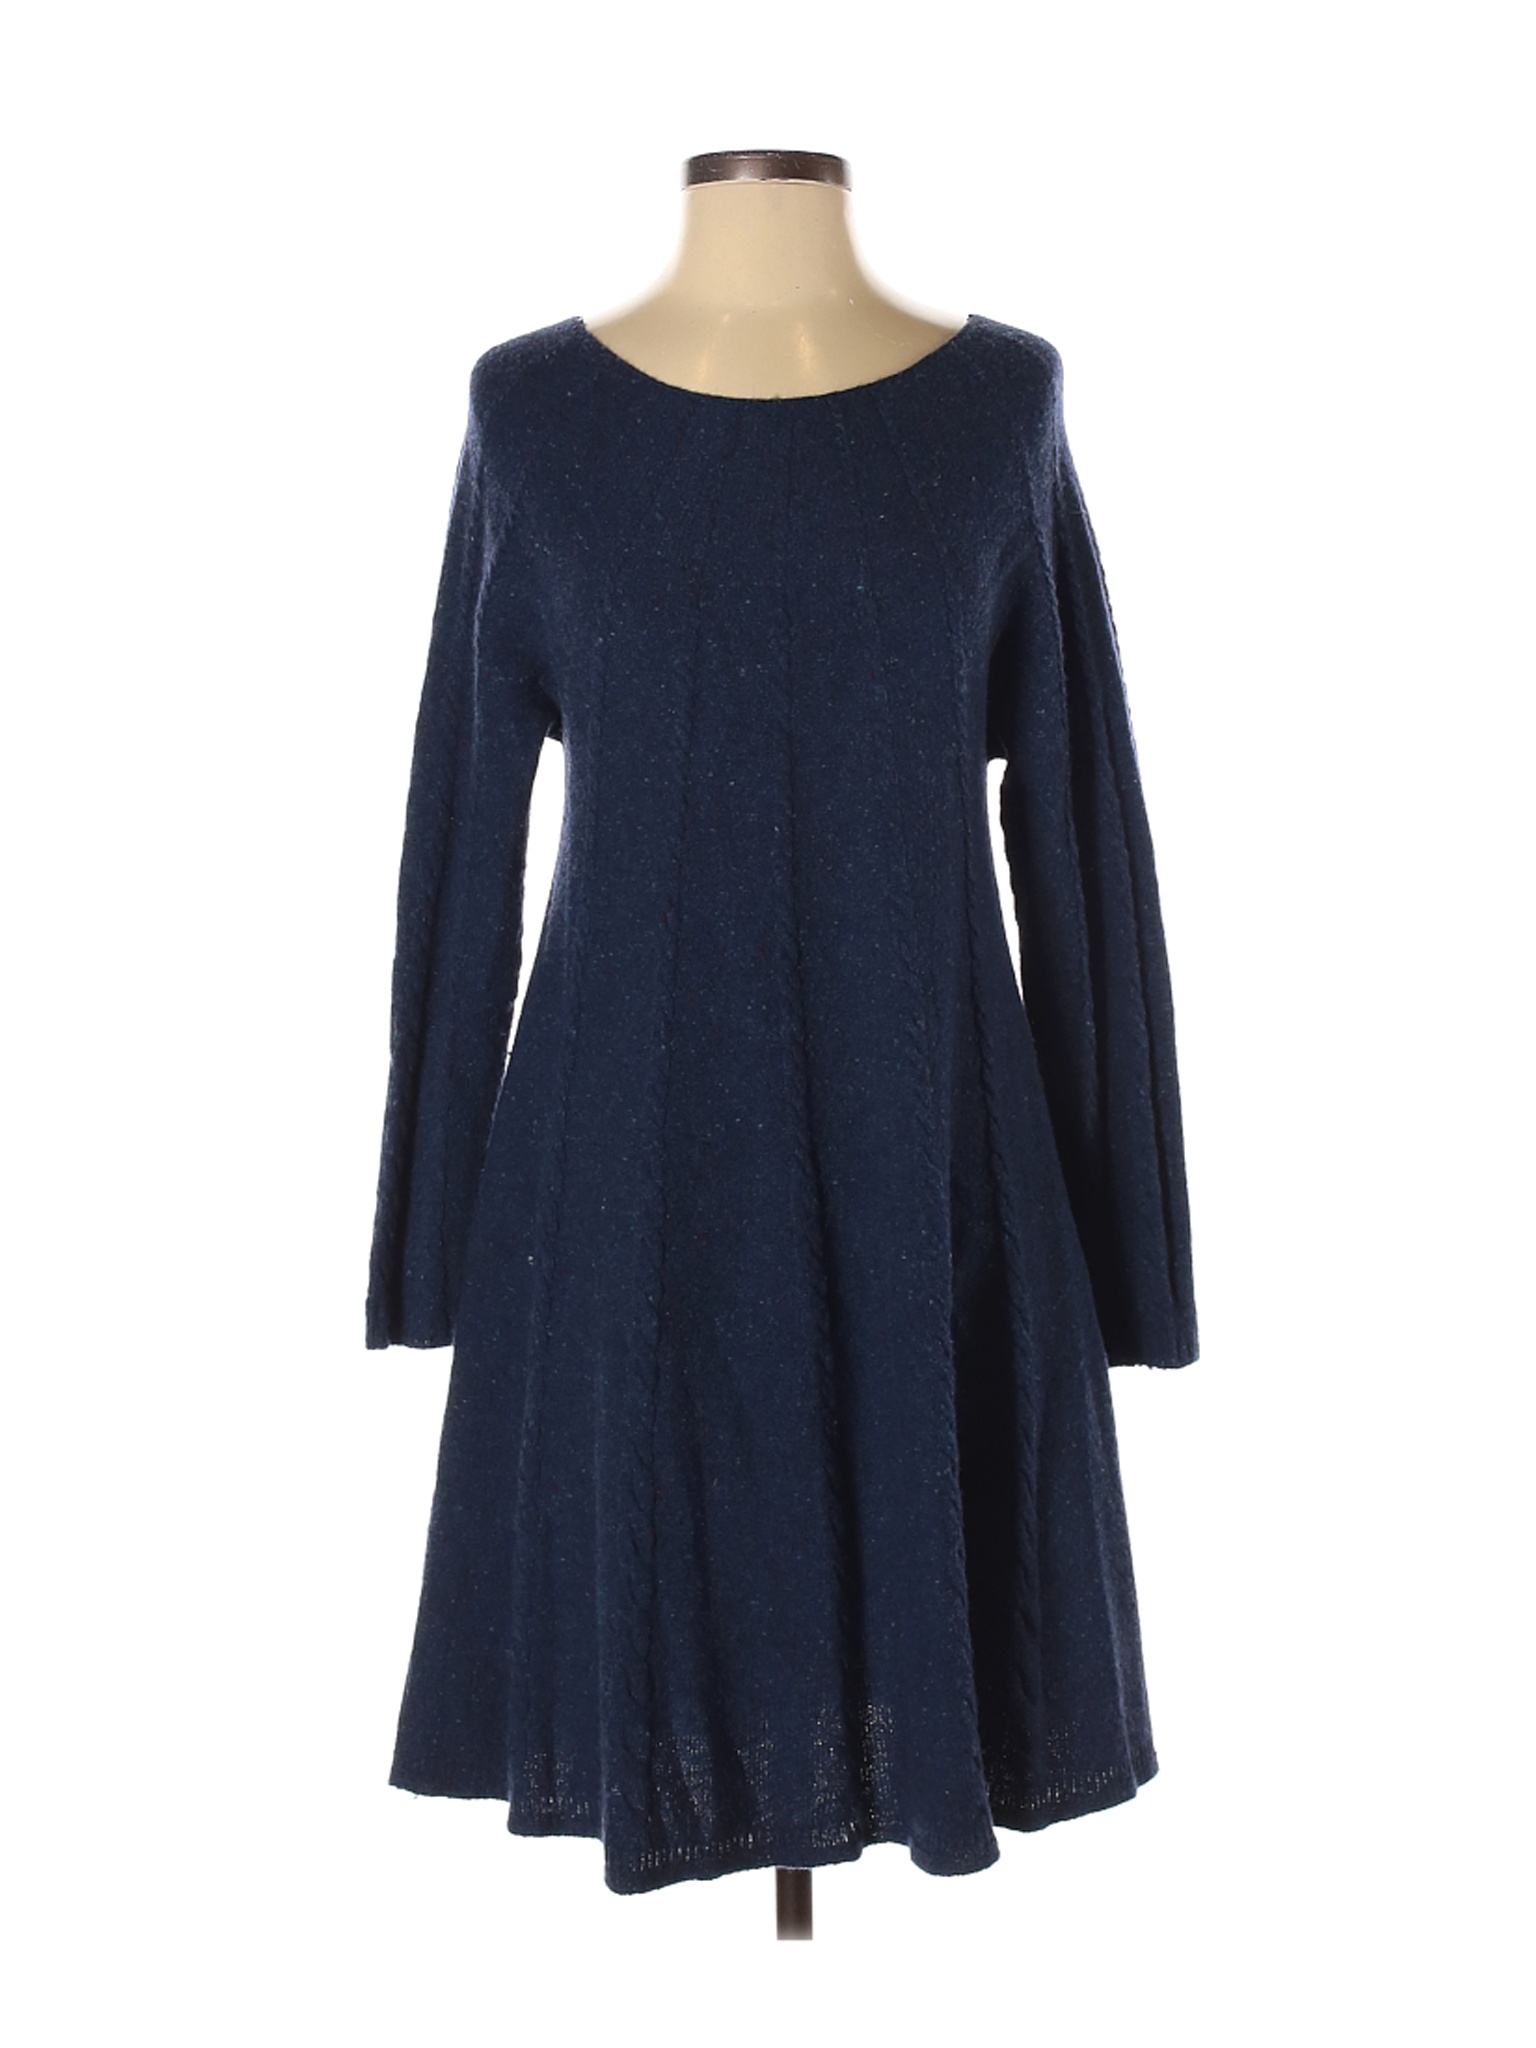 Sundance Women Blue Casual Dress S Petites | eBay